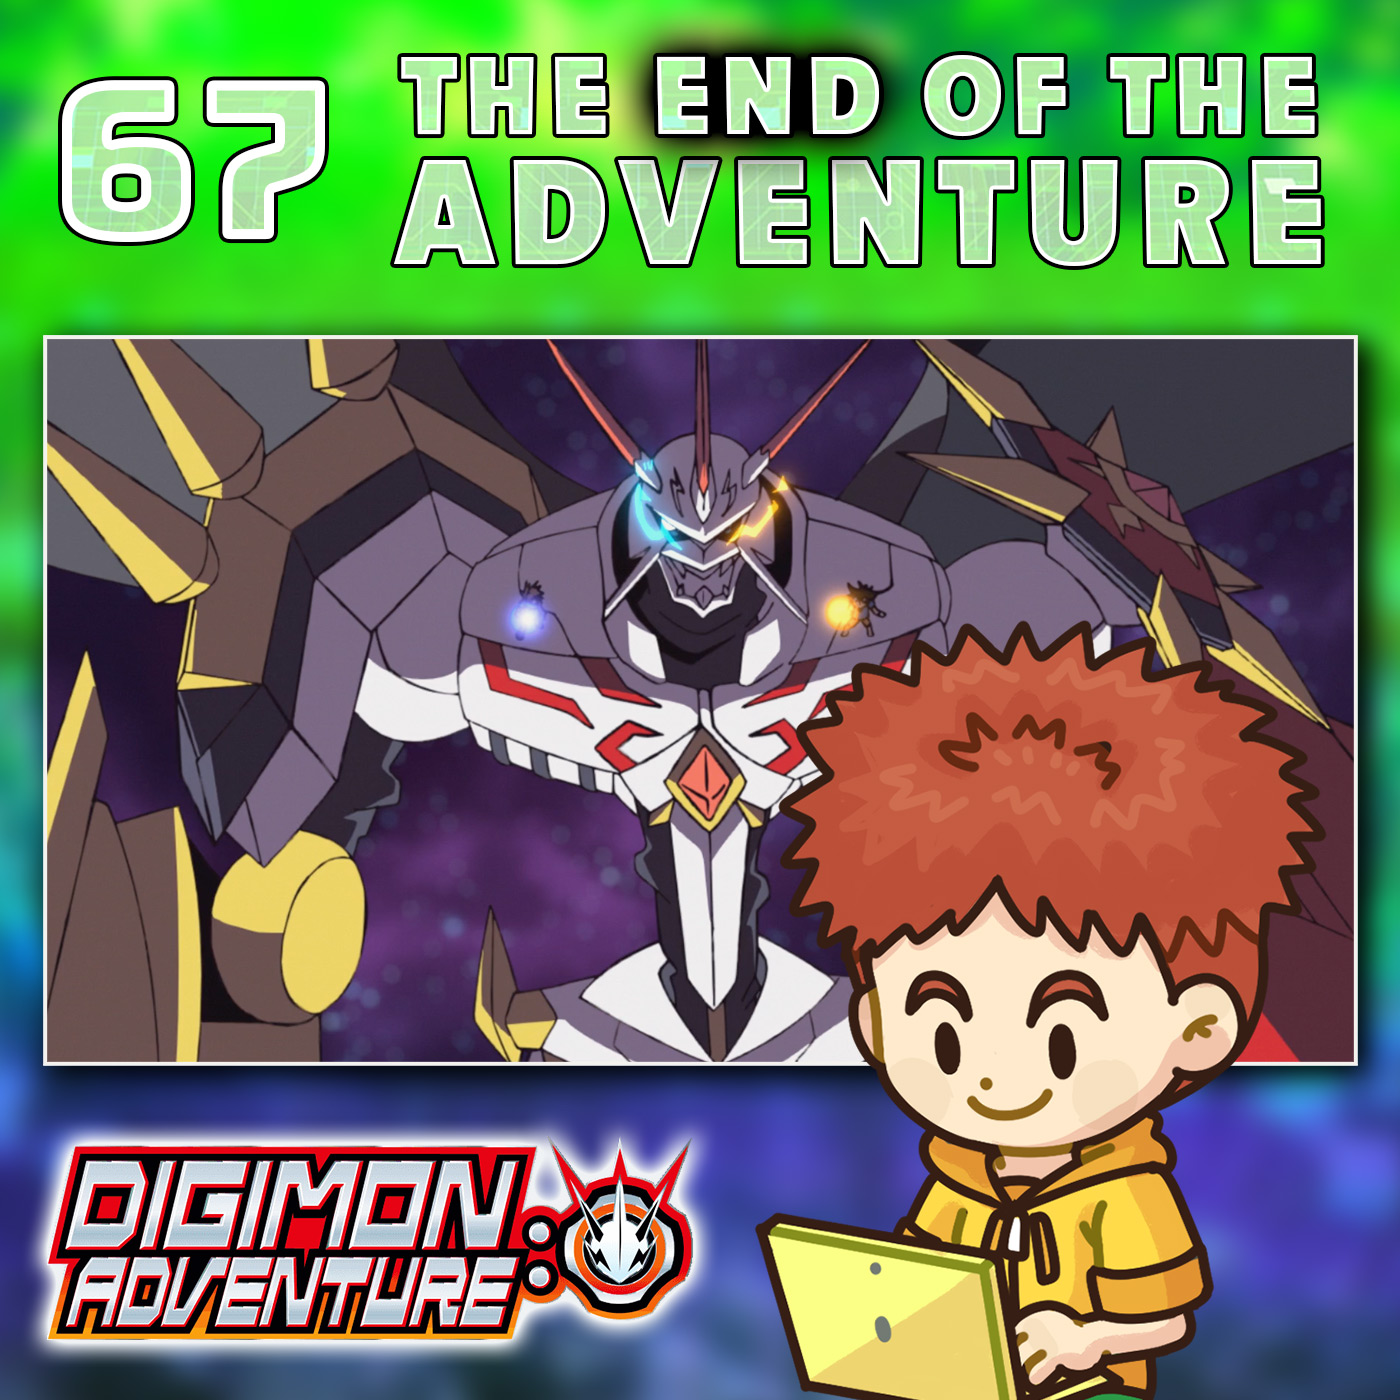 Digimon Adventure tri.: Determination (movie 2) - Anime News Network